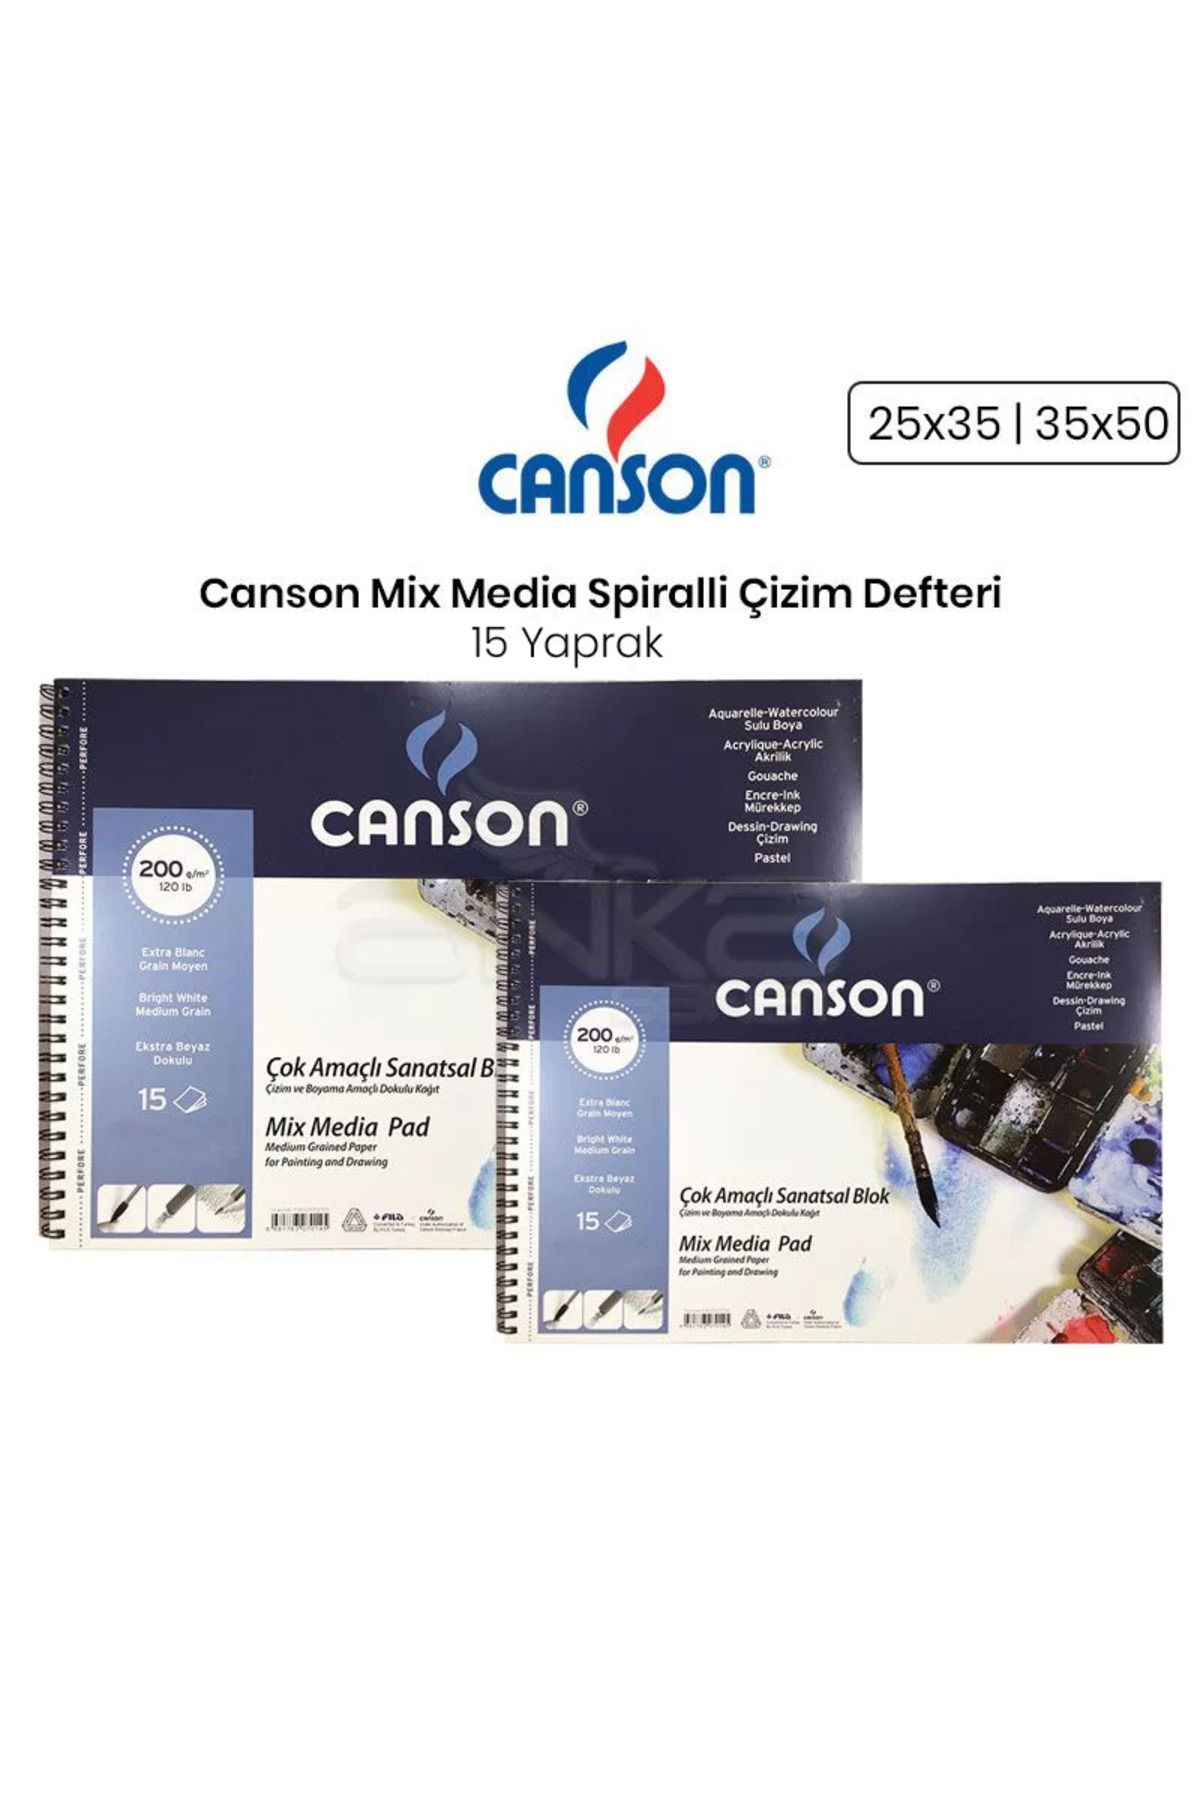 Canson Mix Media Spiralli Çizim Defteri 15 Yaprak 200g